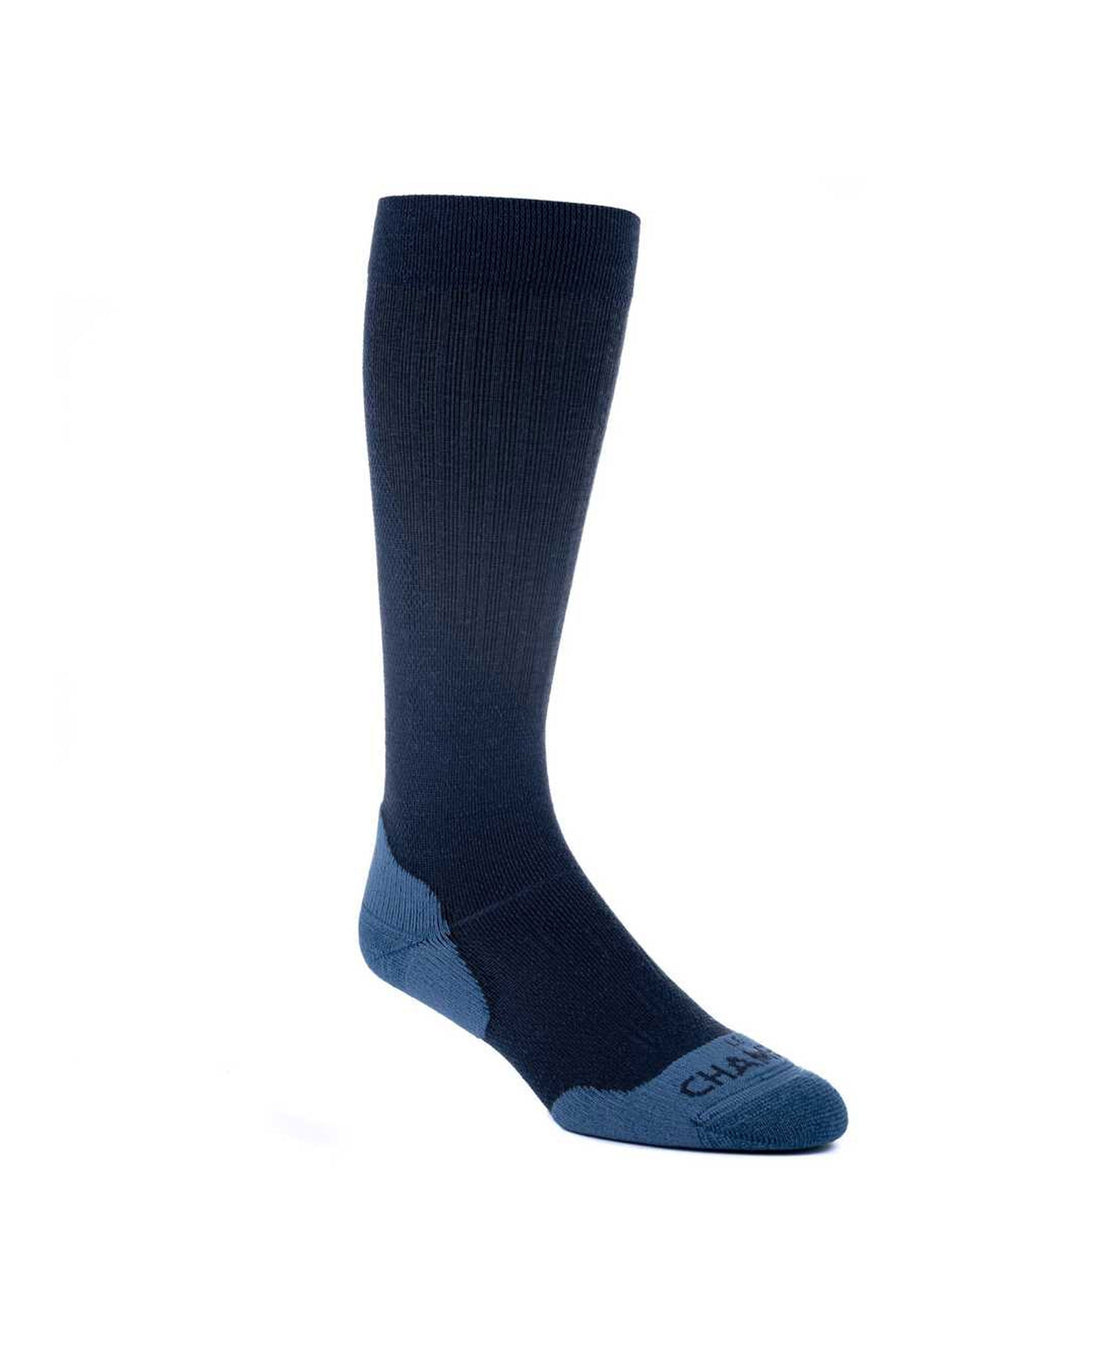 Dark Blue, Purple & Ochre Fair Isle Hand Knitted Socks – CosyBuddha